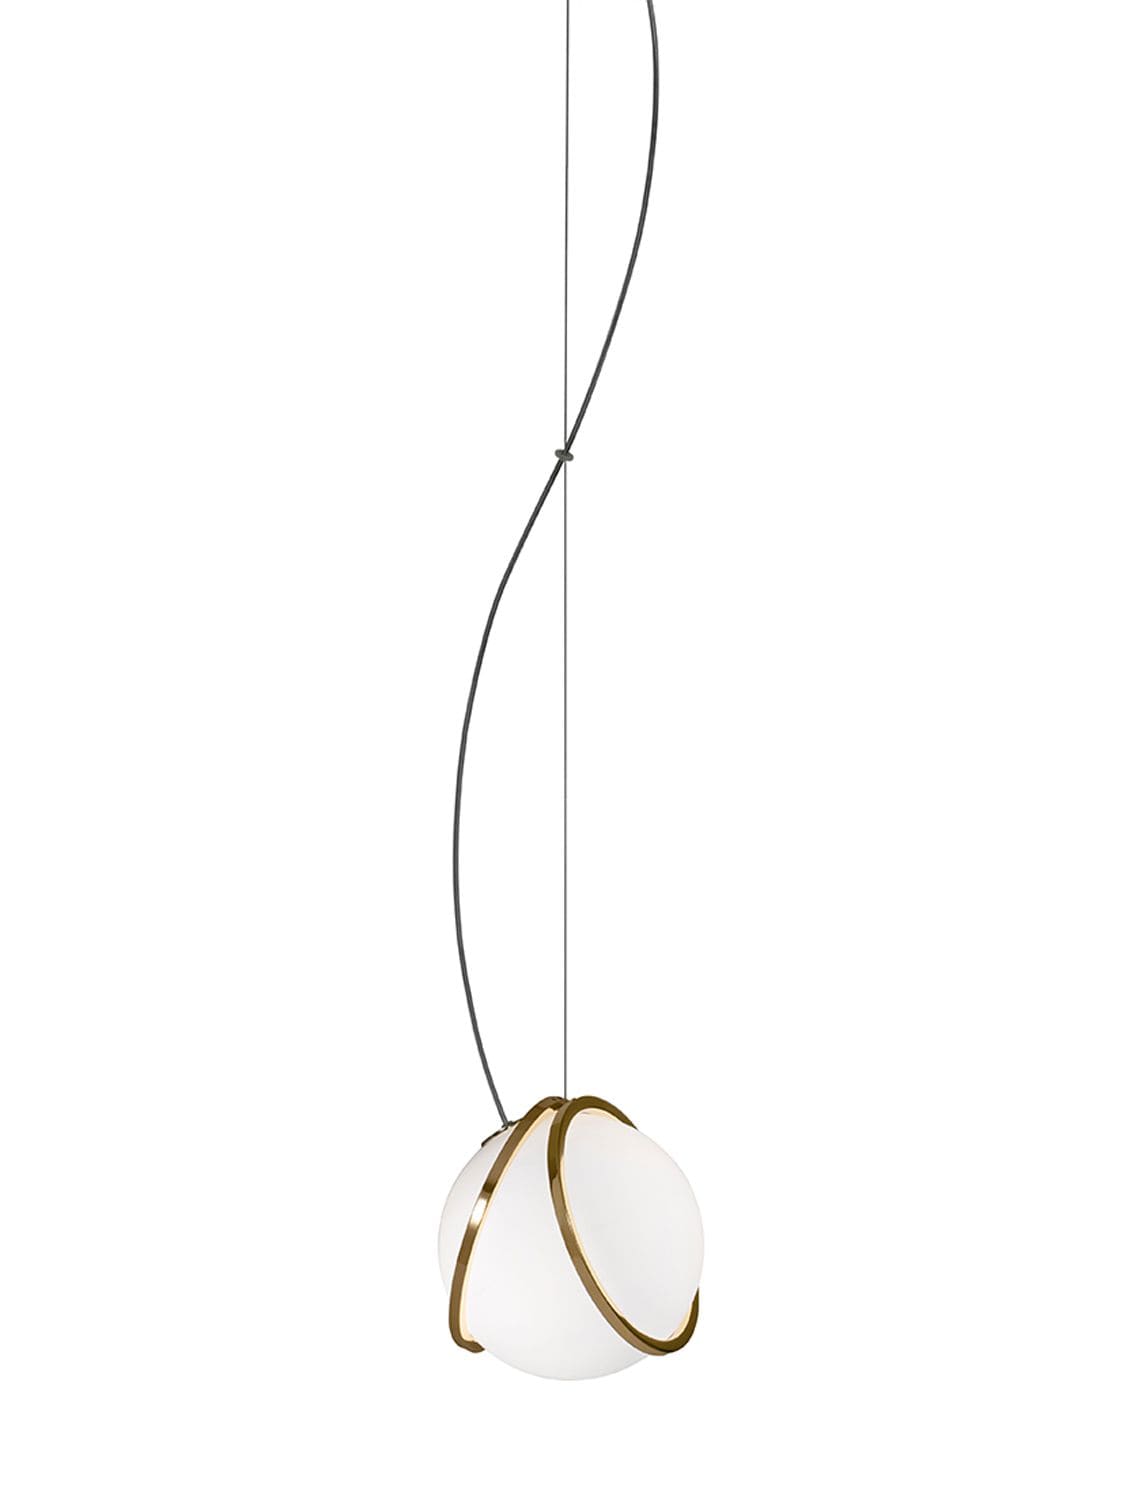 Terzani Lighting Pug Pendant Lamp W/ Canopy In Pol.brass,satin